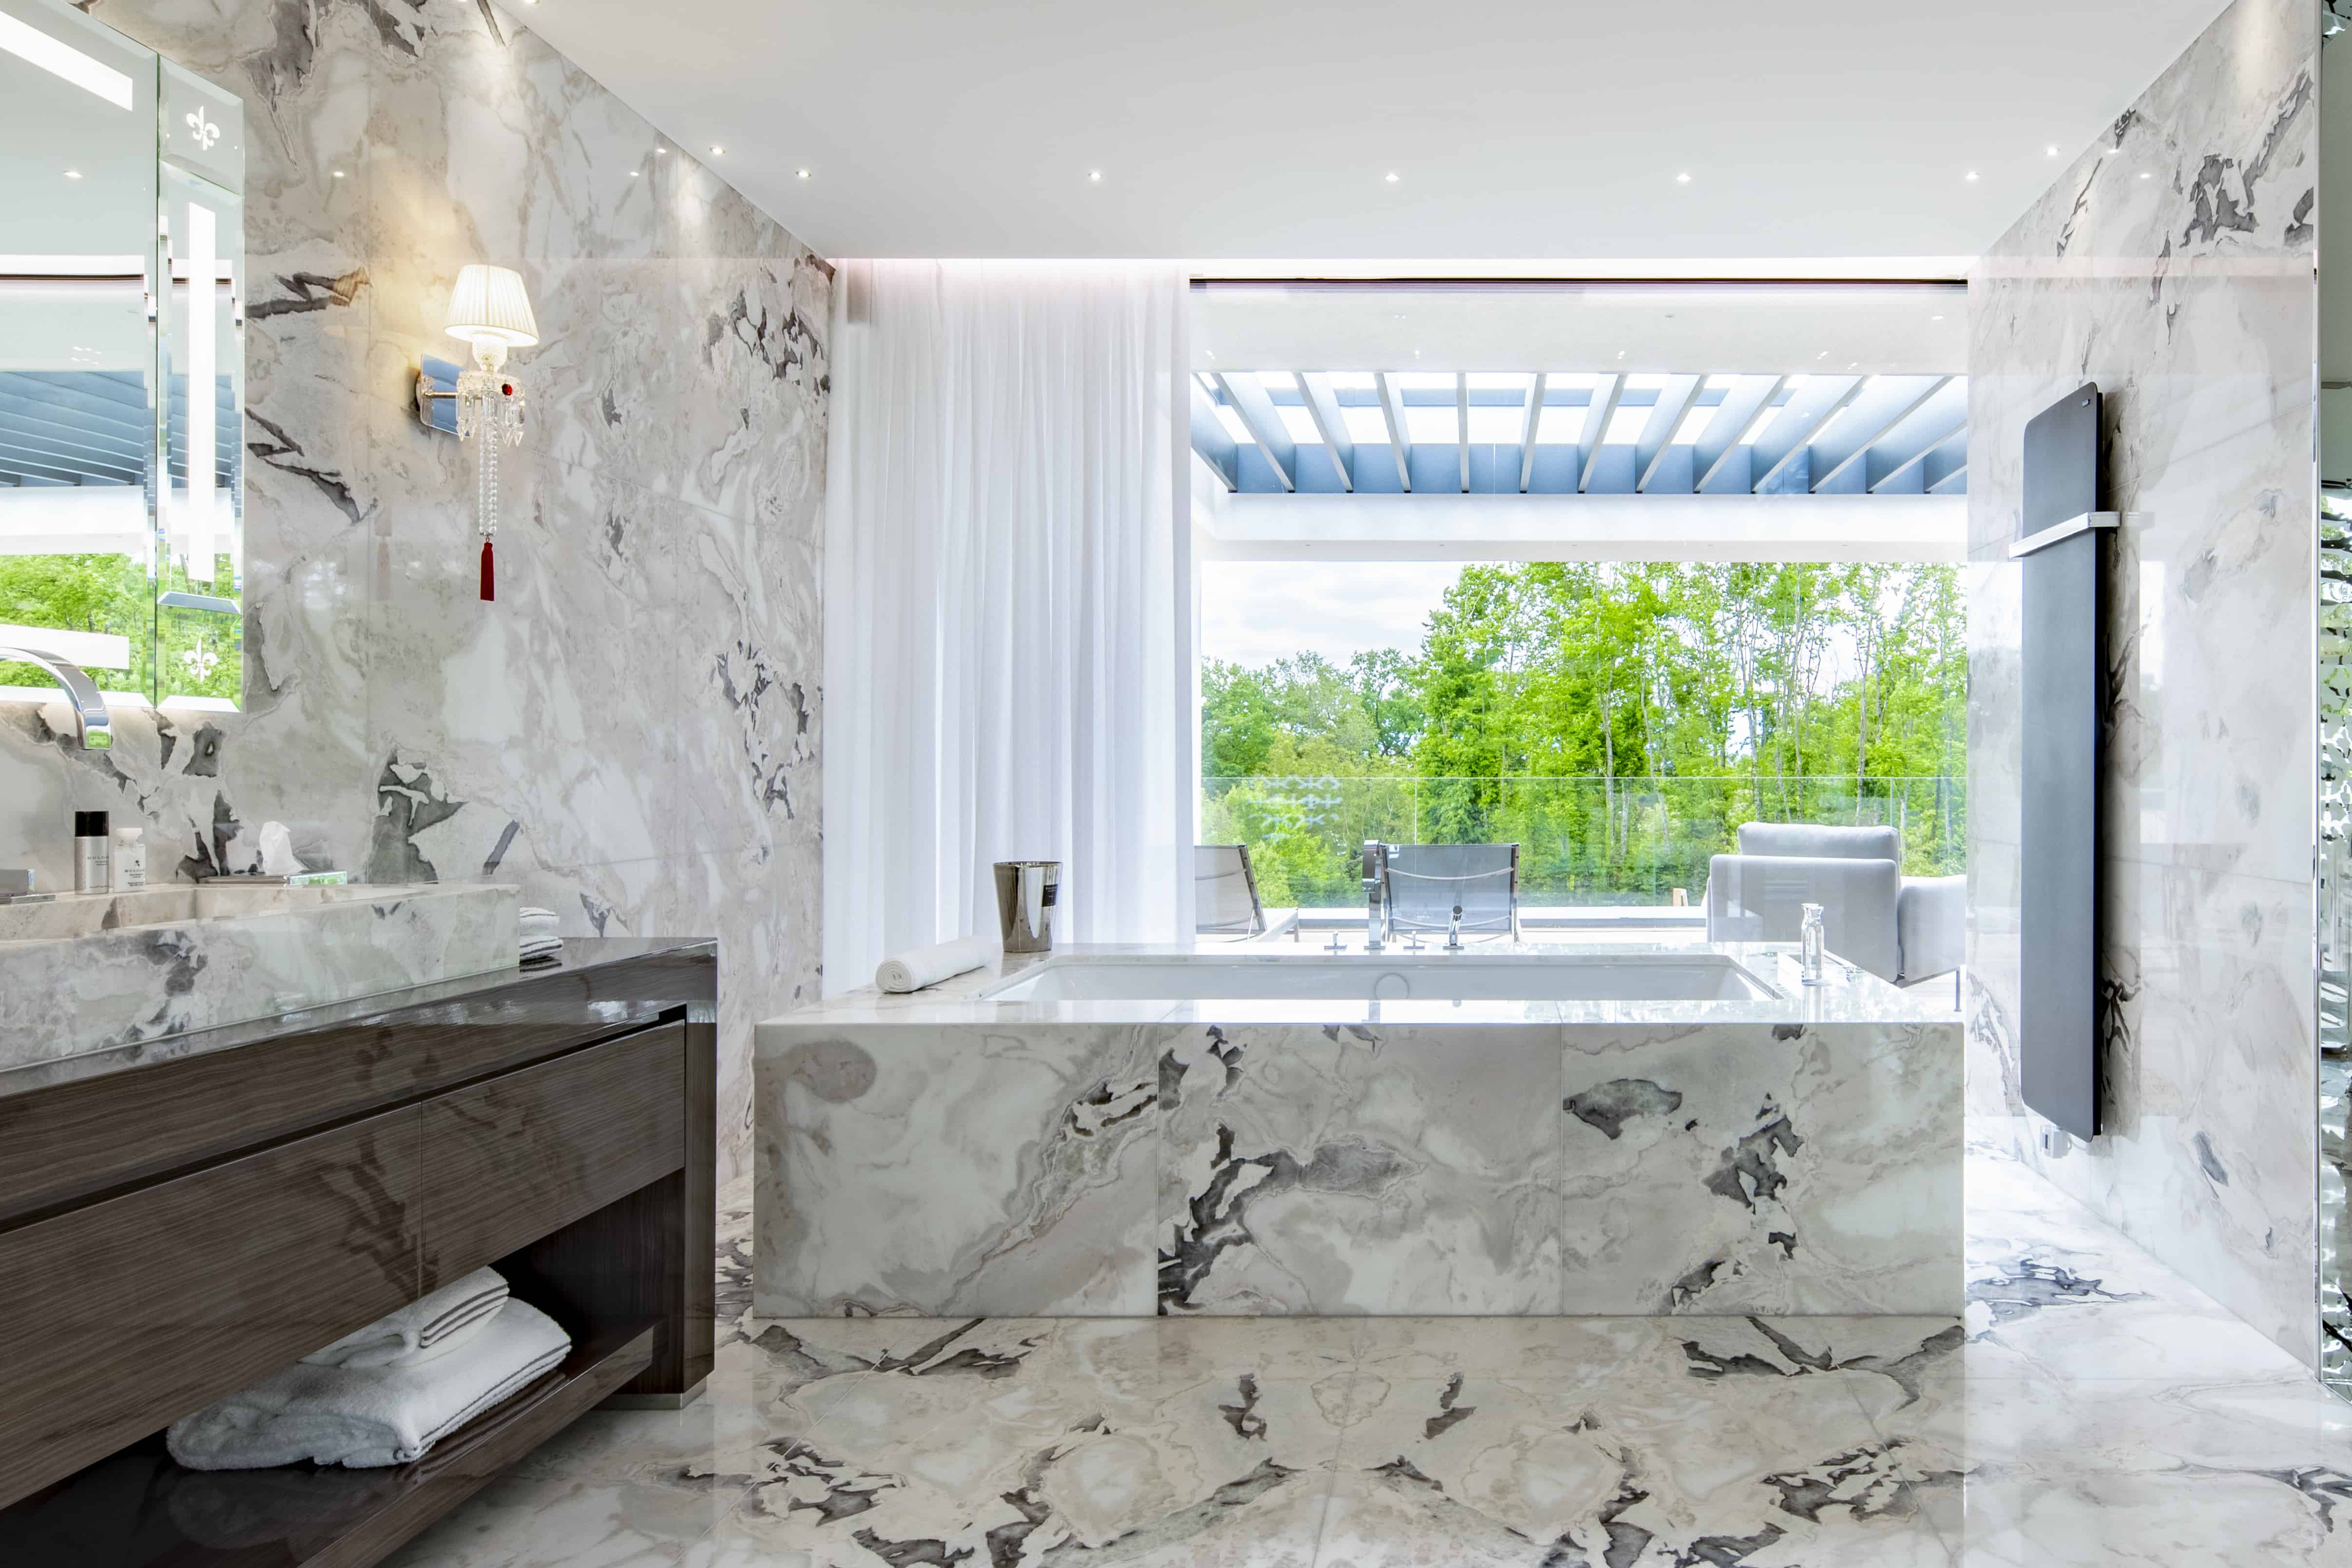 luxury hotel bathrooms